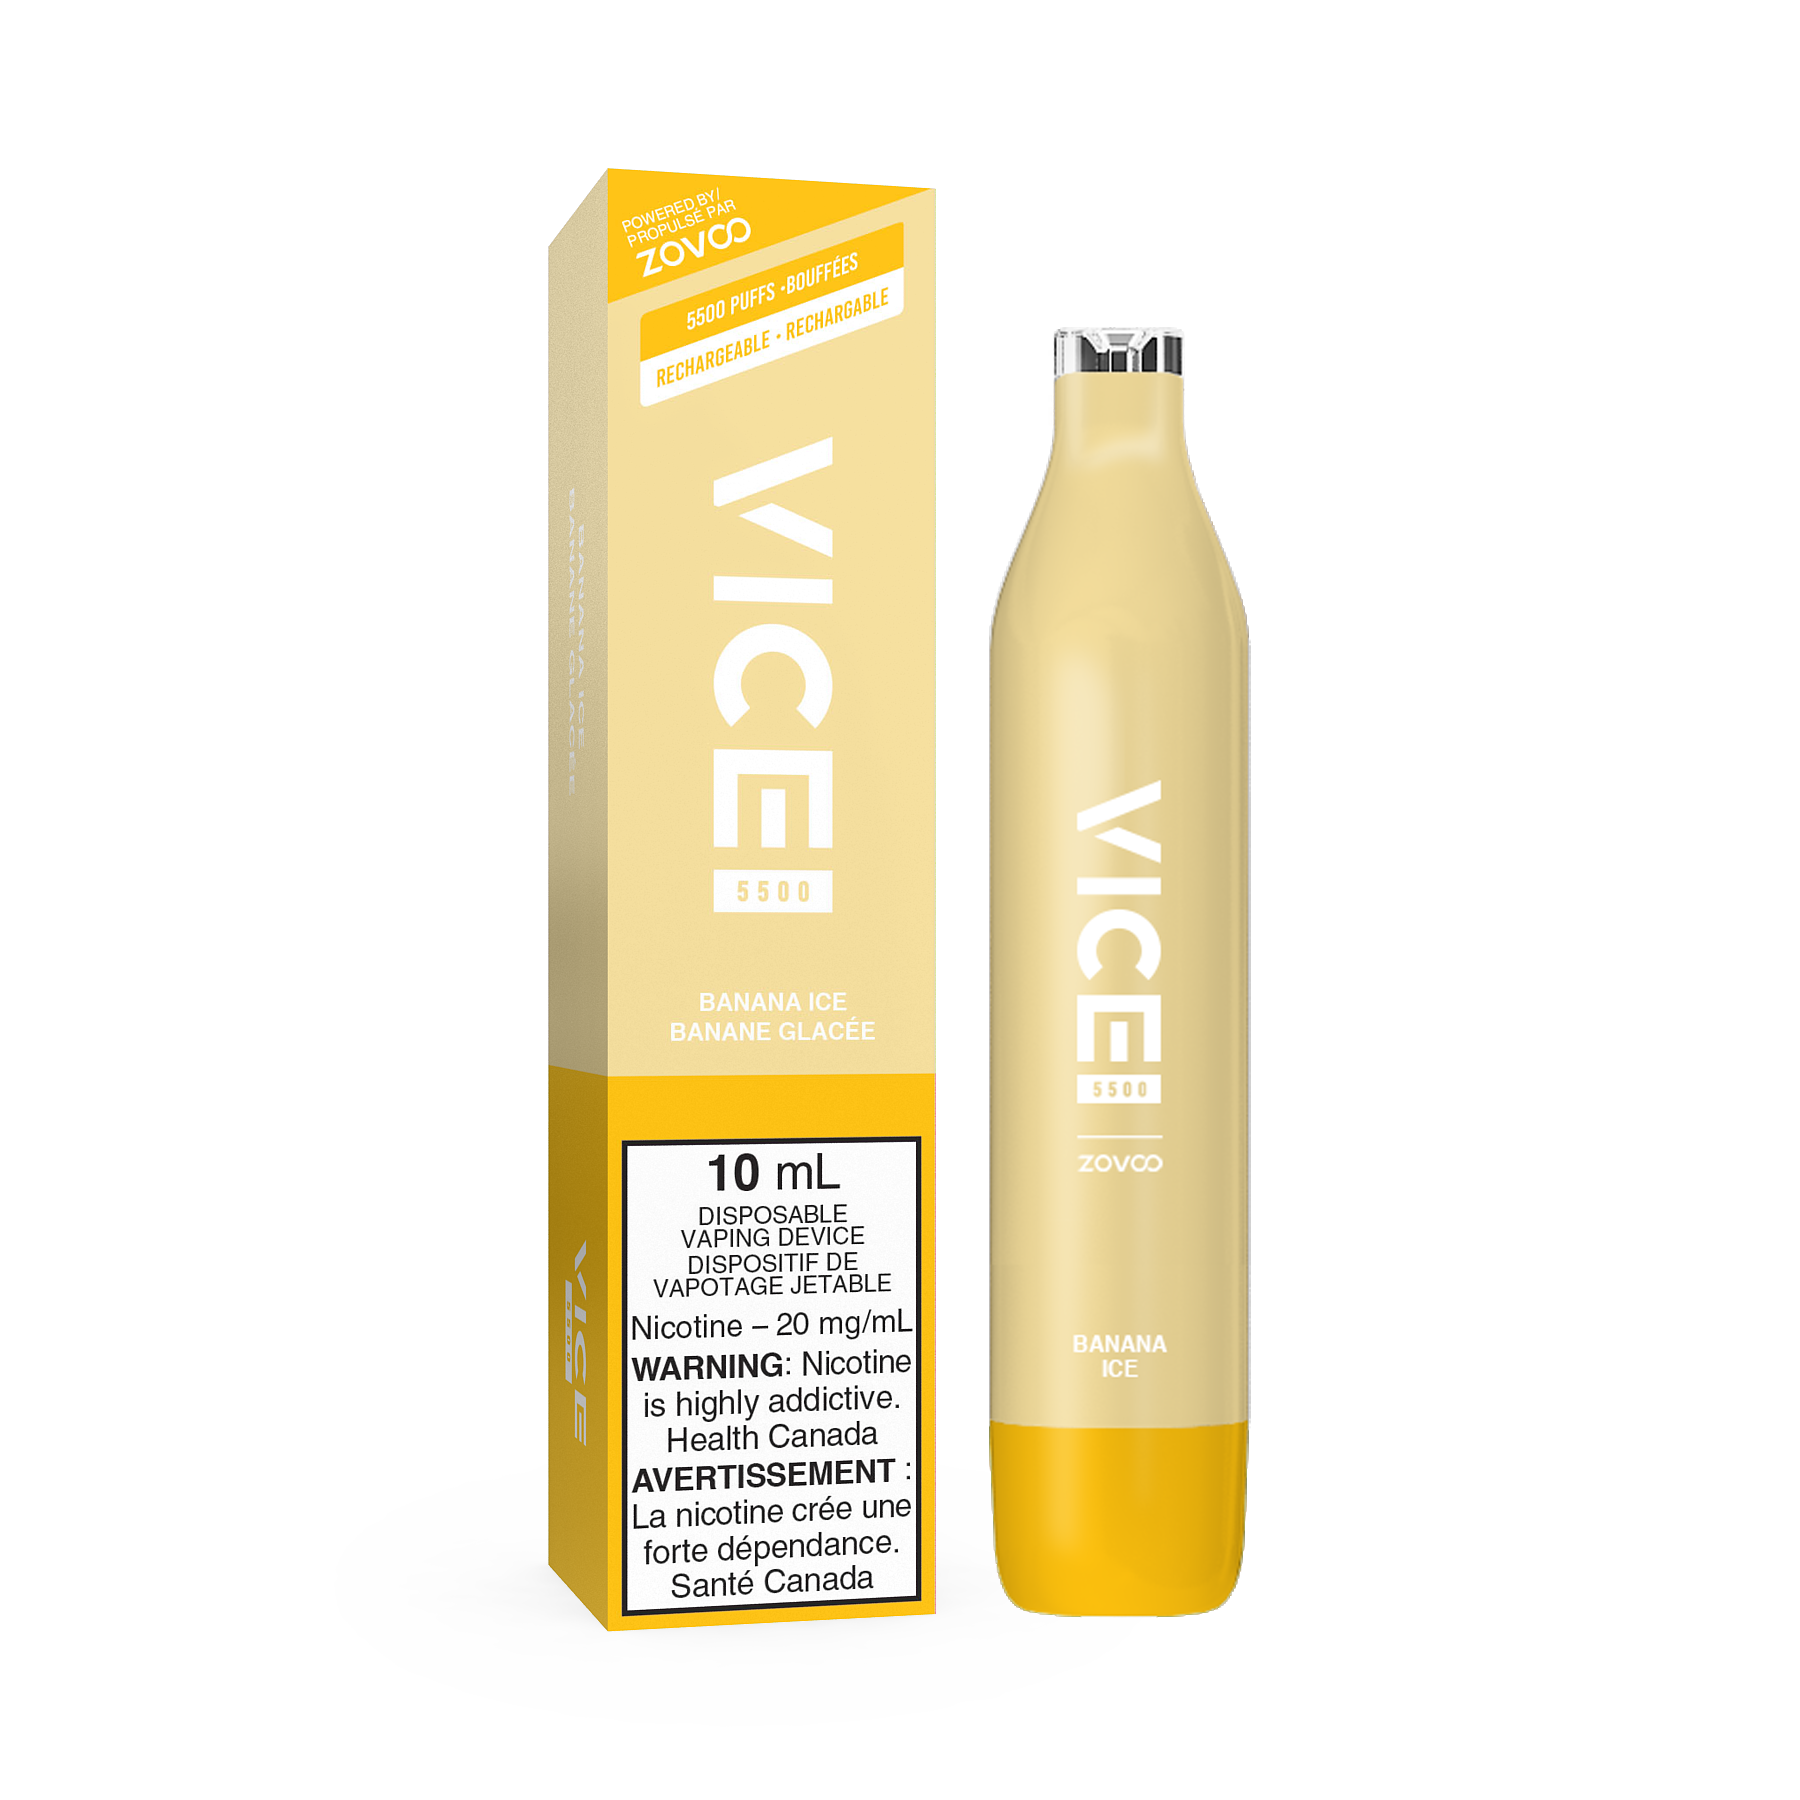 Banana Ice - VICE 5500 - 50mg - 6pc/box